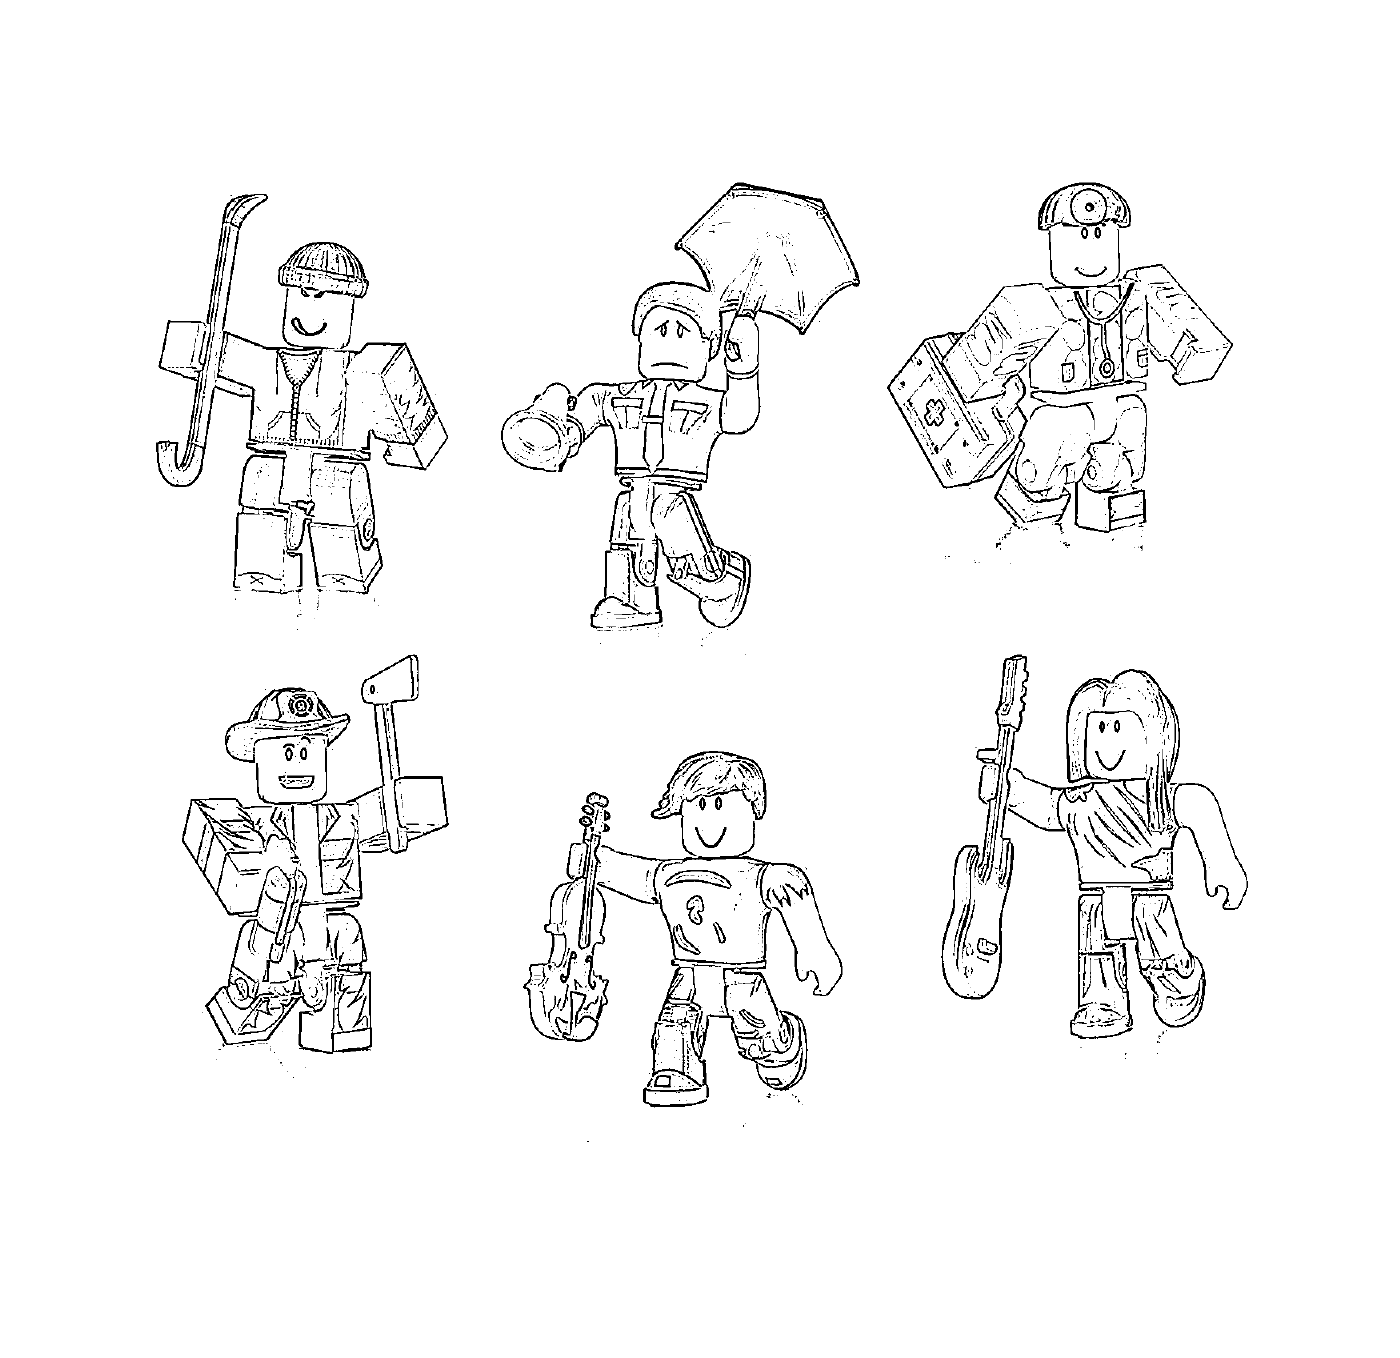  Roblox characters drawn 